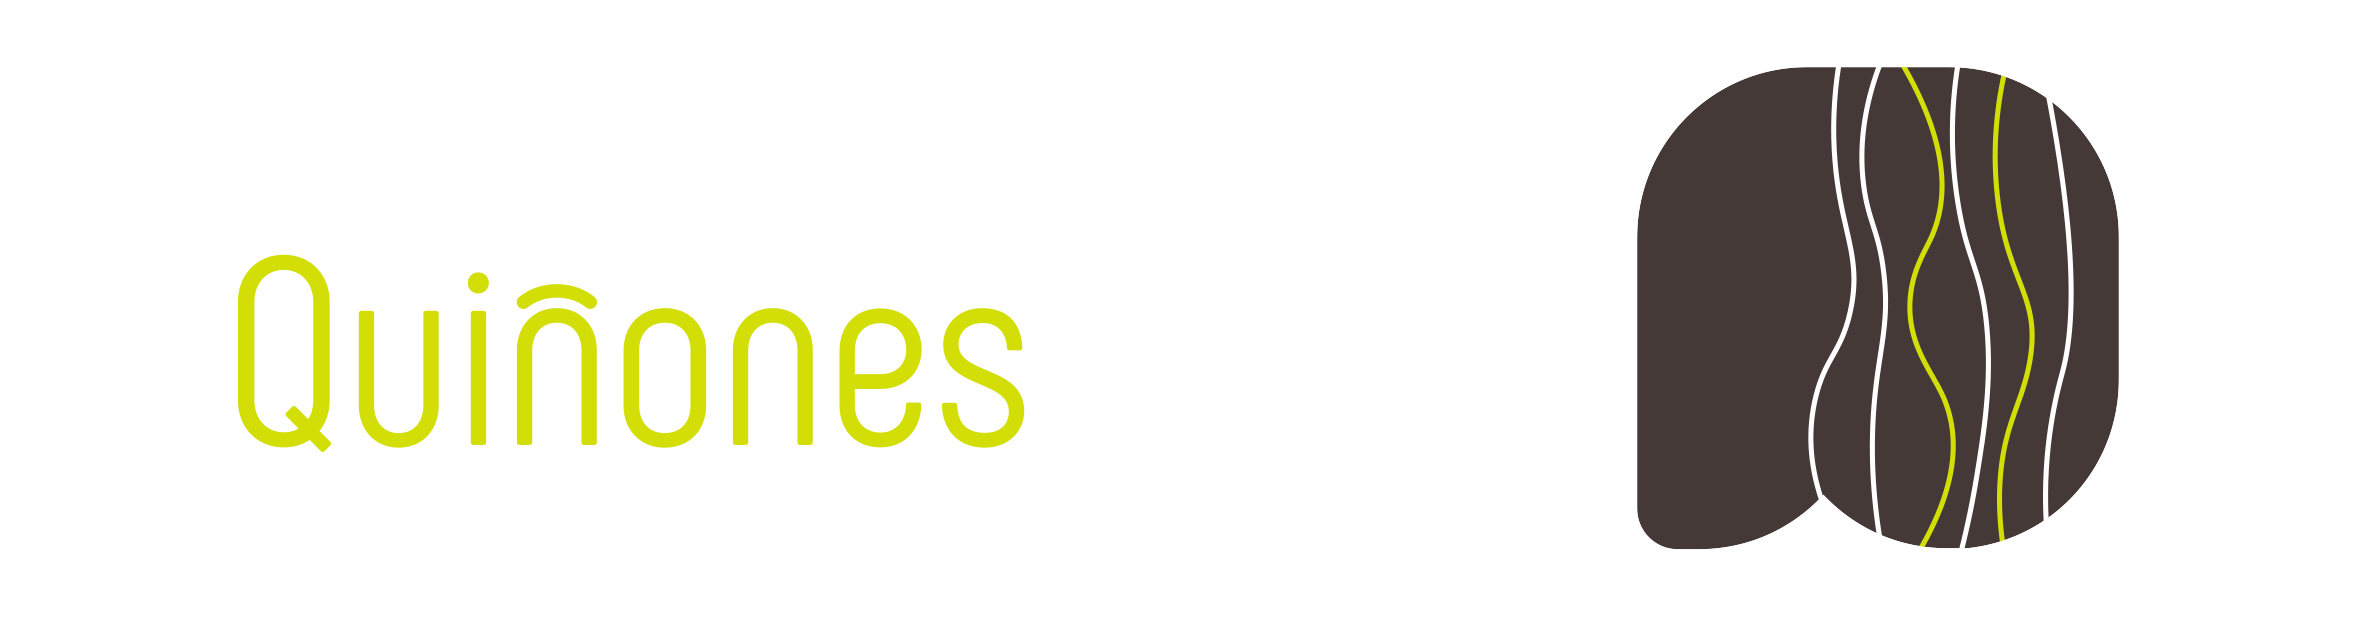 Clínica Dental – Quiñones Belzuz